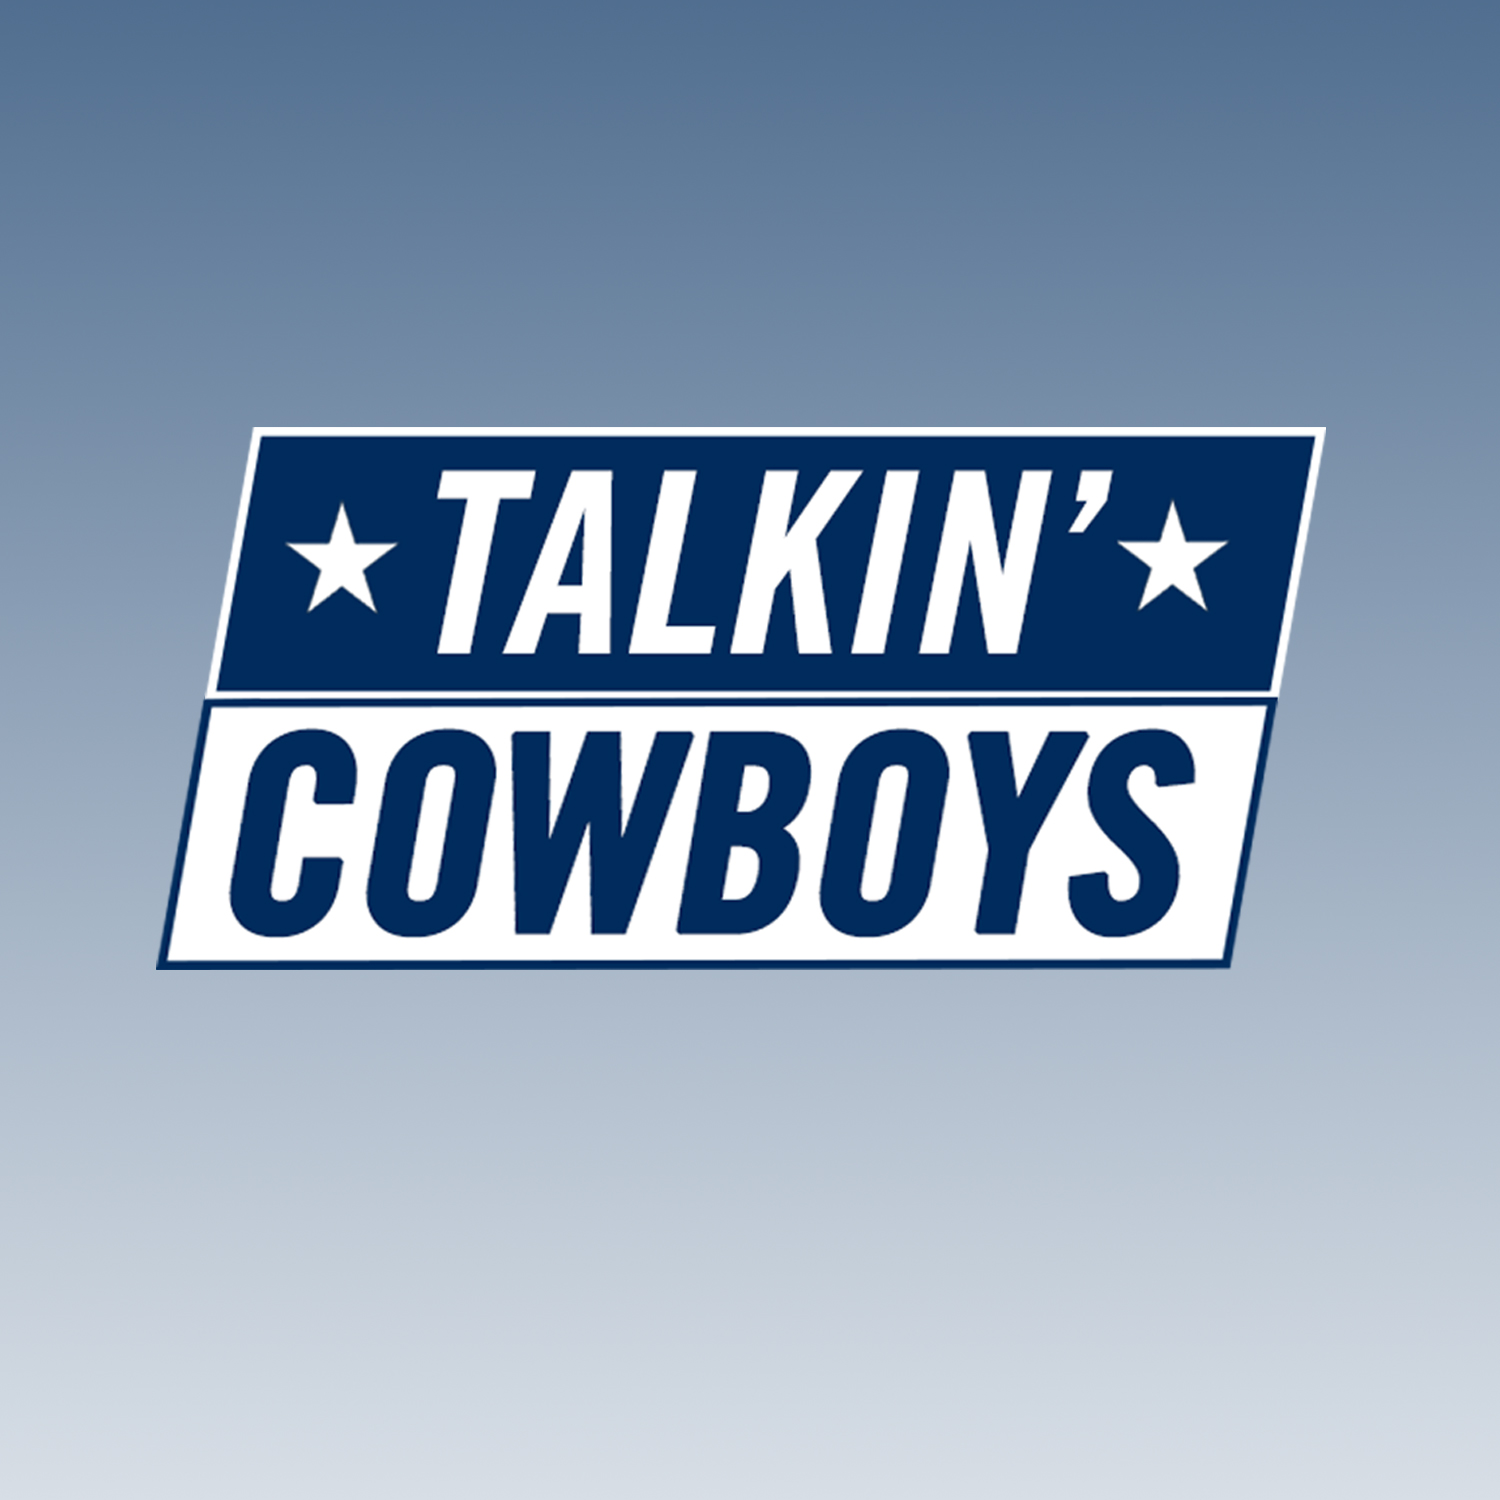 Talkin’ Cowboys: Moving Mountains